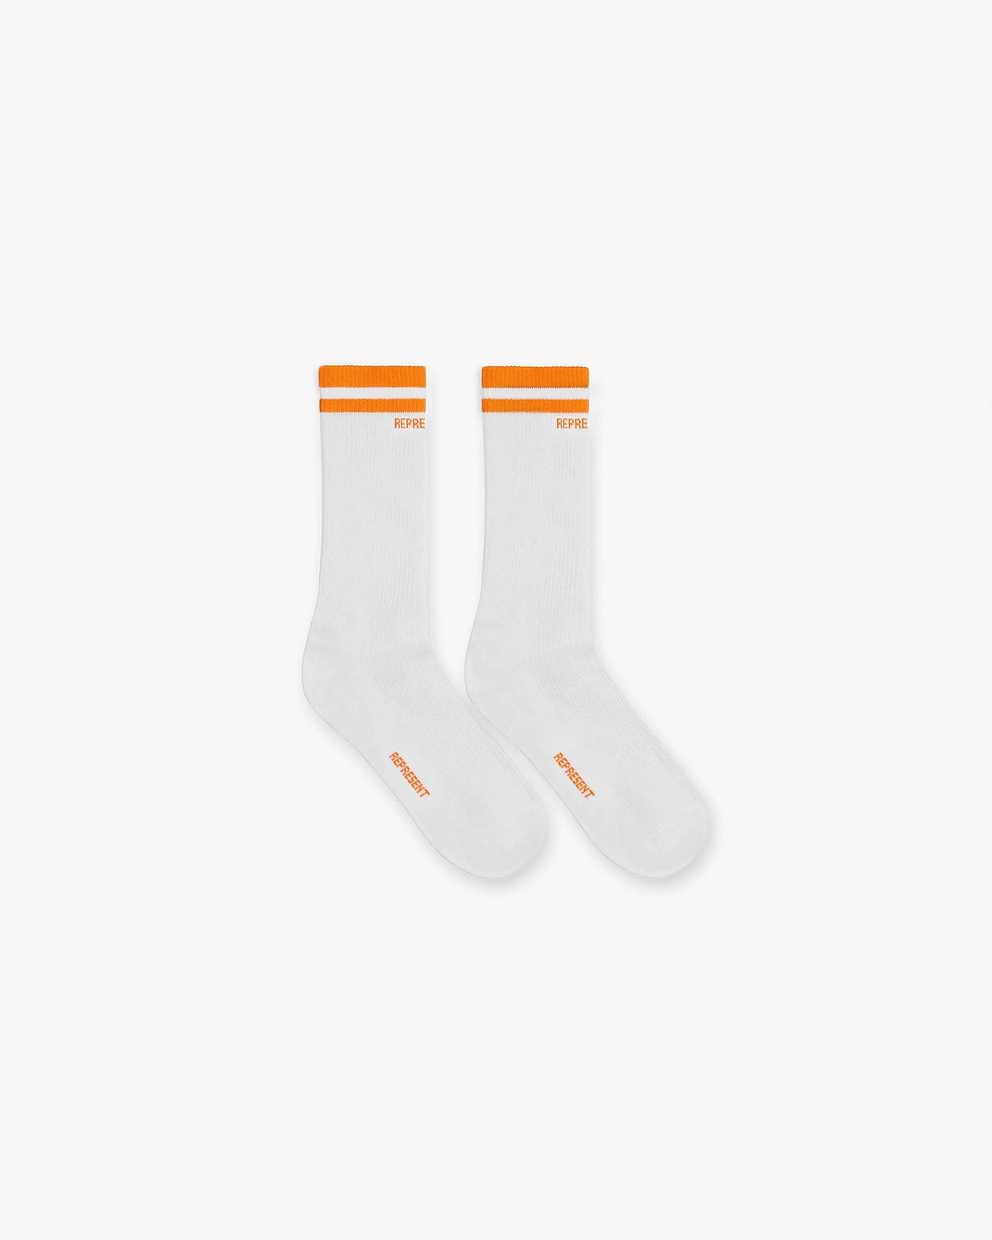 Represent College Socks - Neon Orange